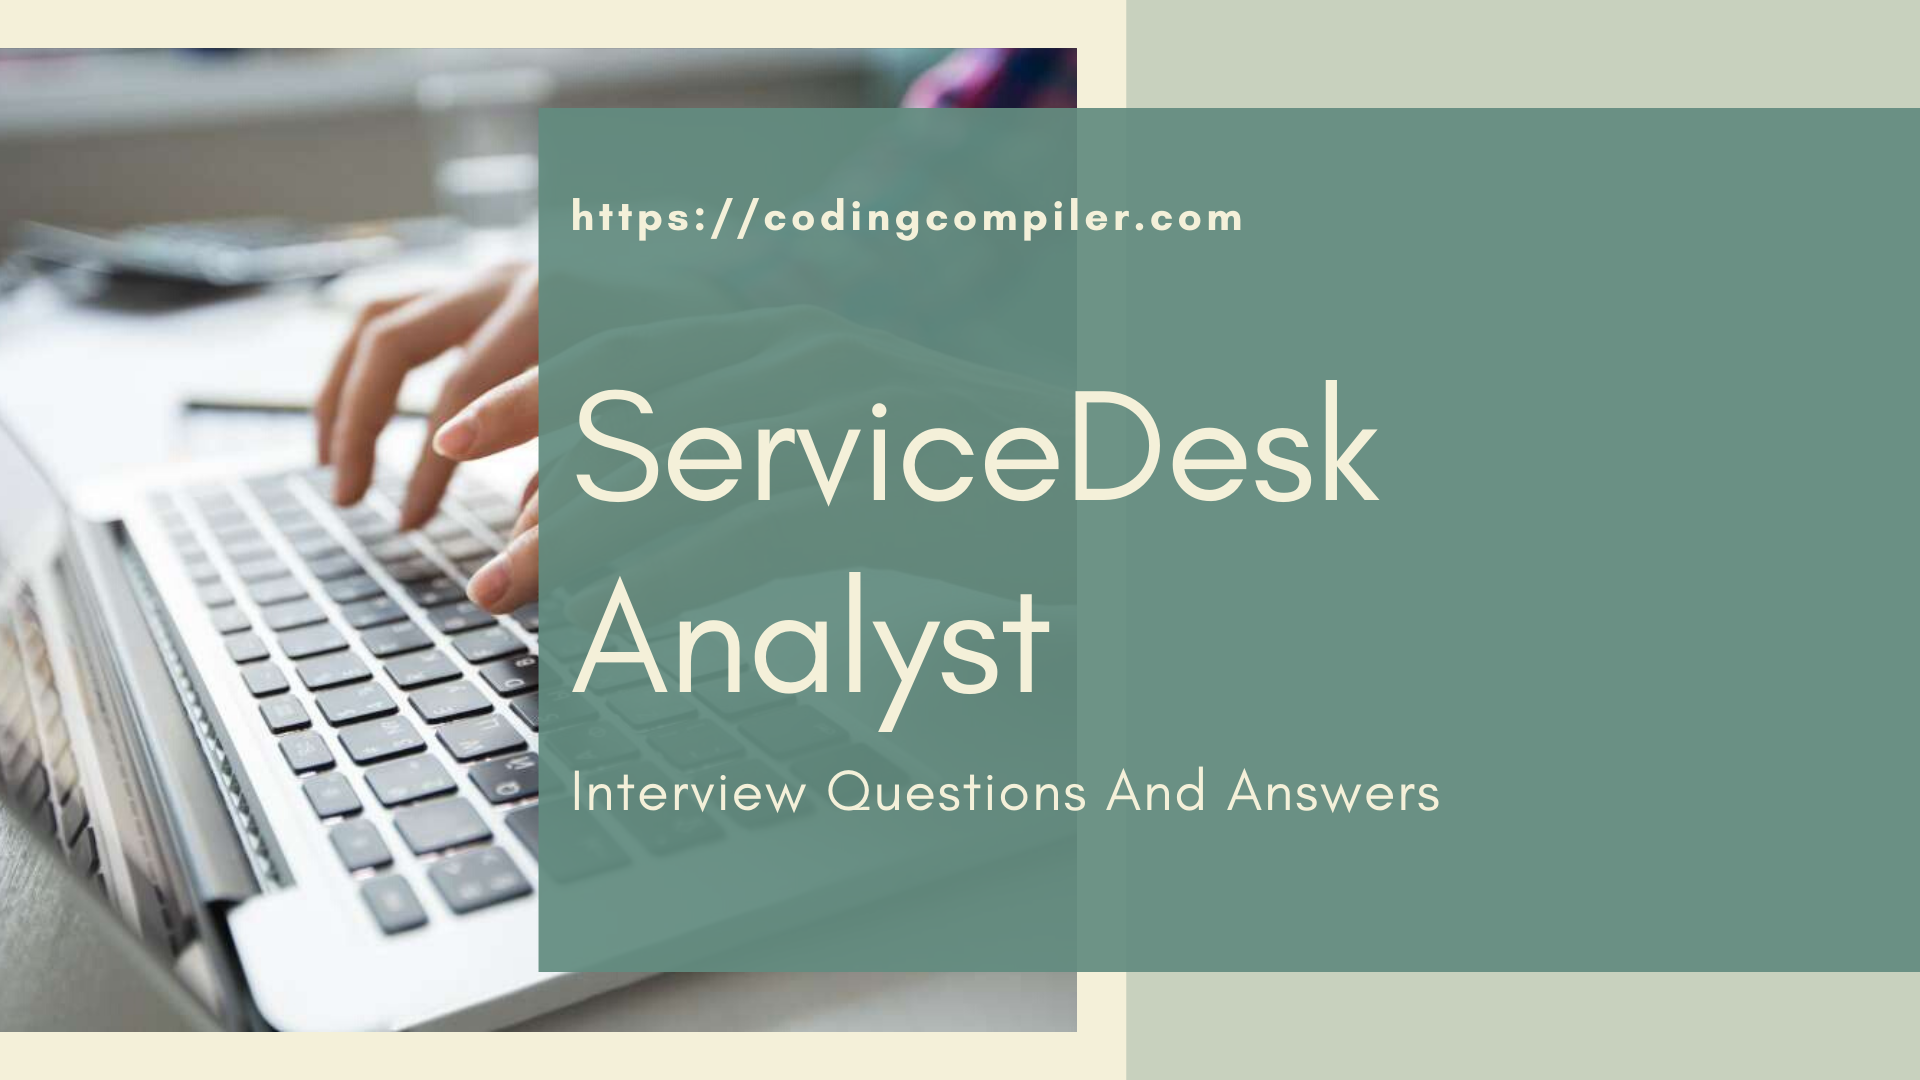 ServiceDesk Analyst Interview Questiins